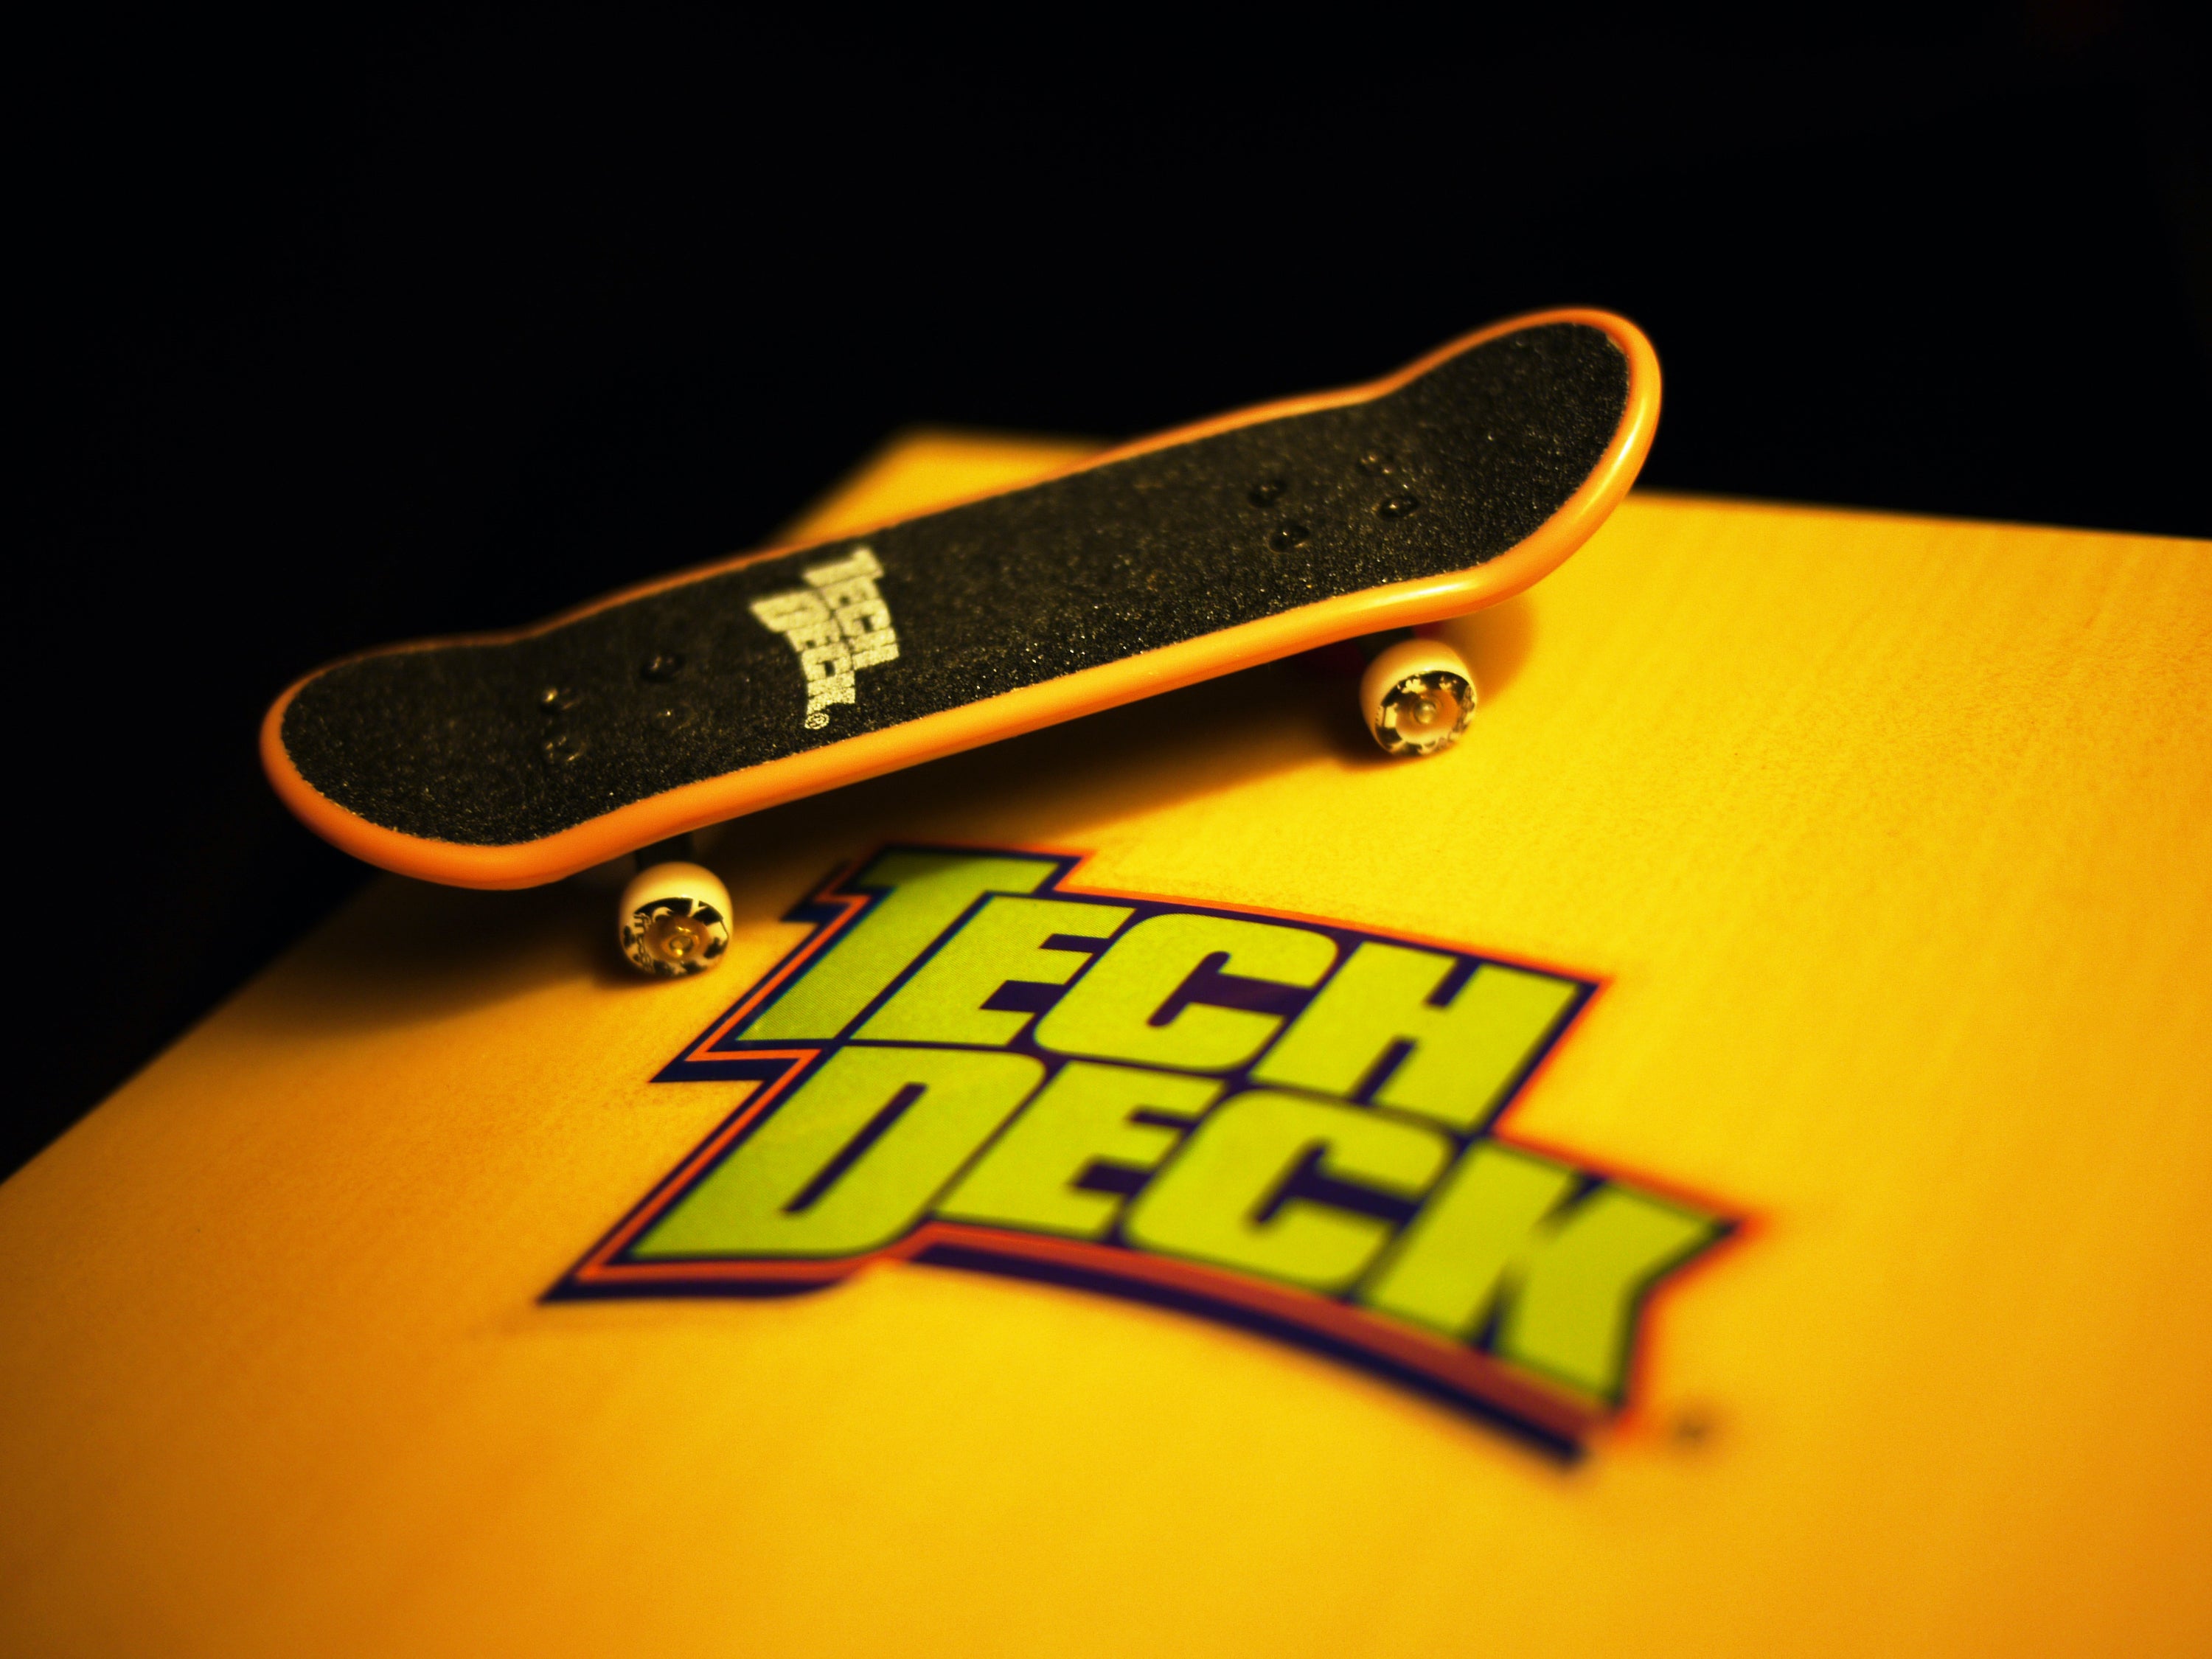 Pack 1 Finger Skate Performance Series Tech Deck